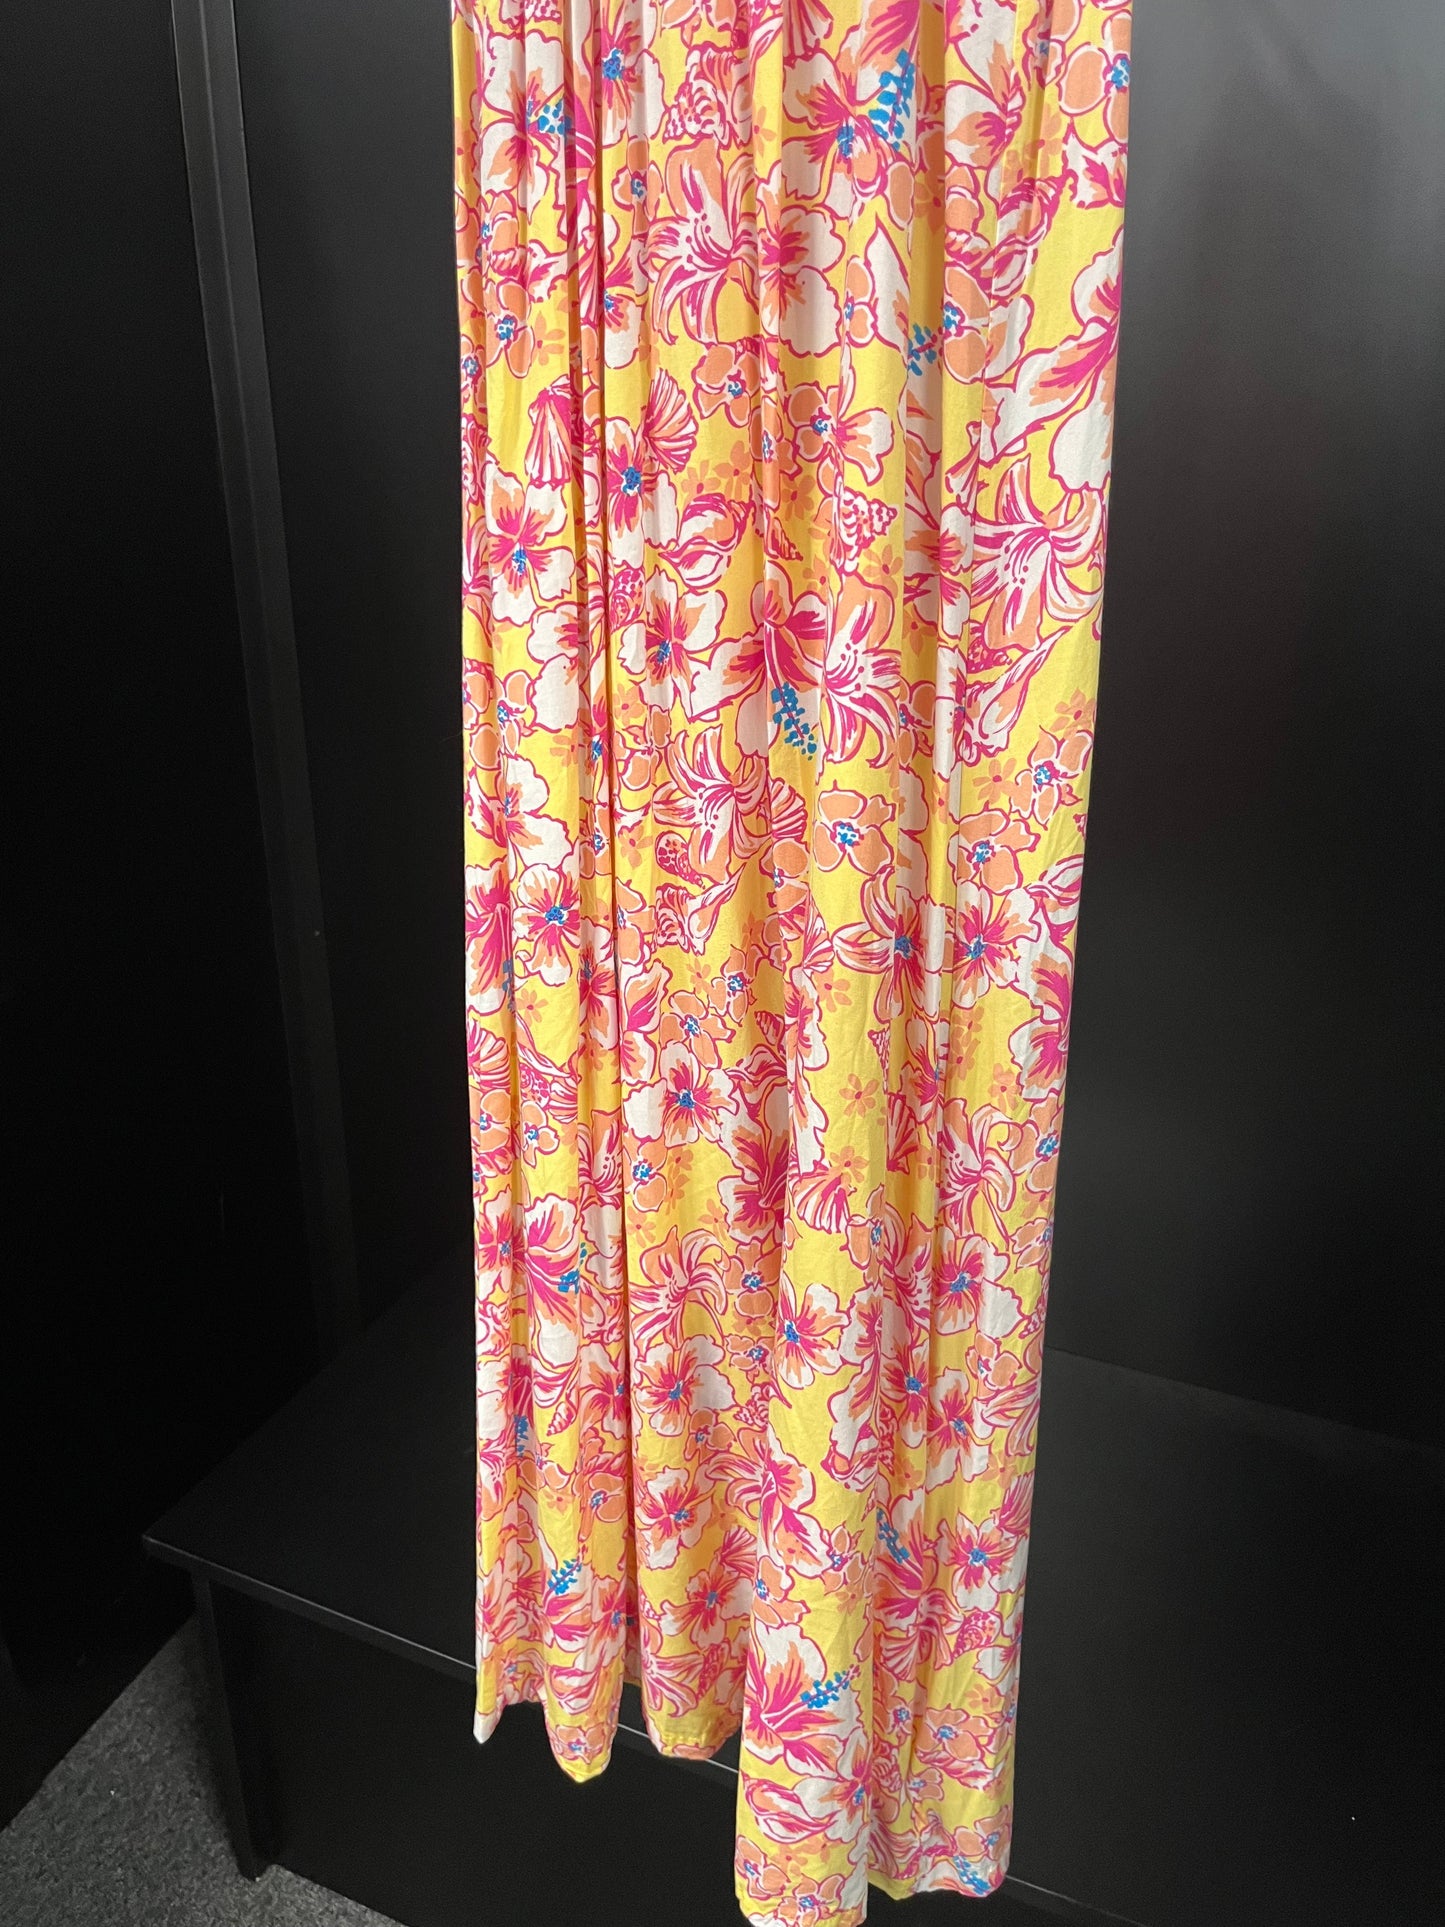 Dress Long Sleeveless By St Tropez  Size: Xs